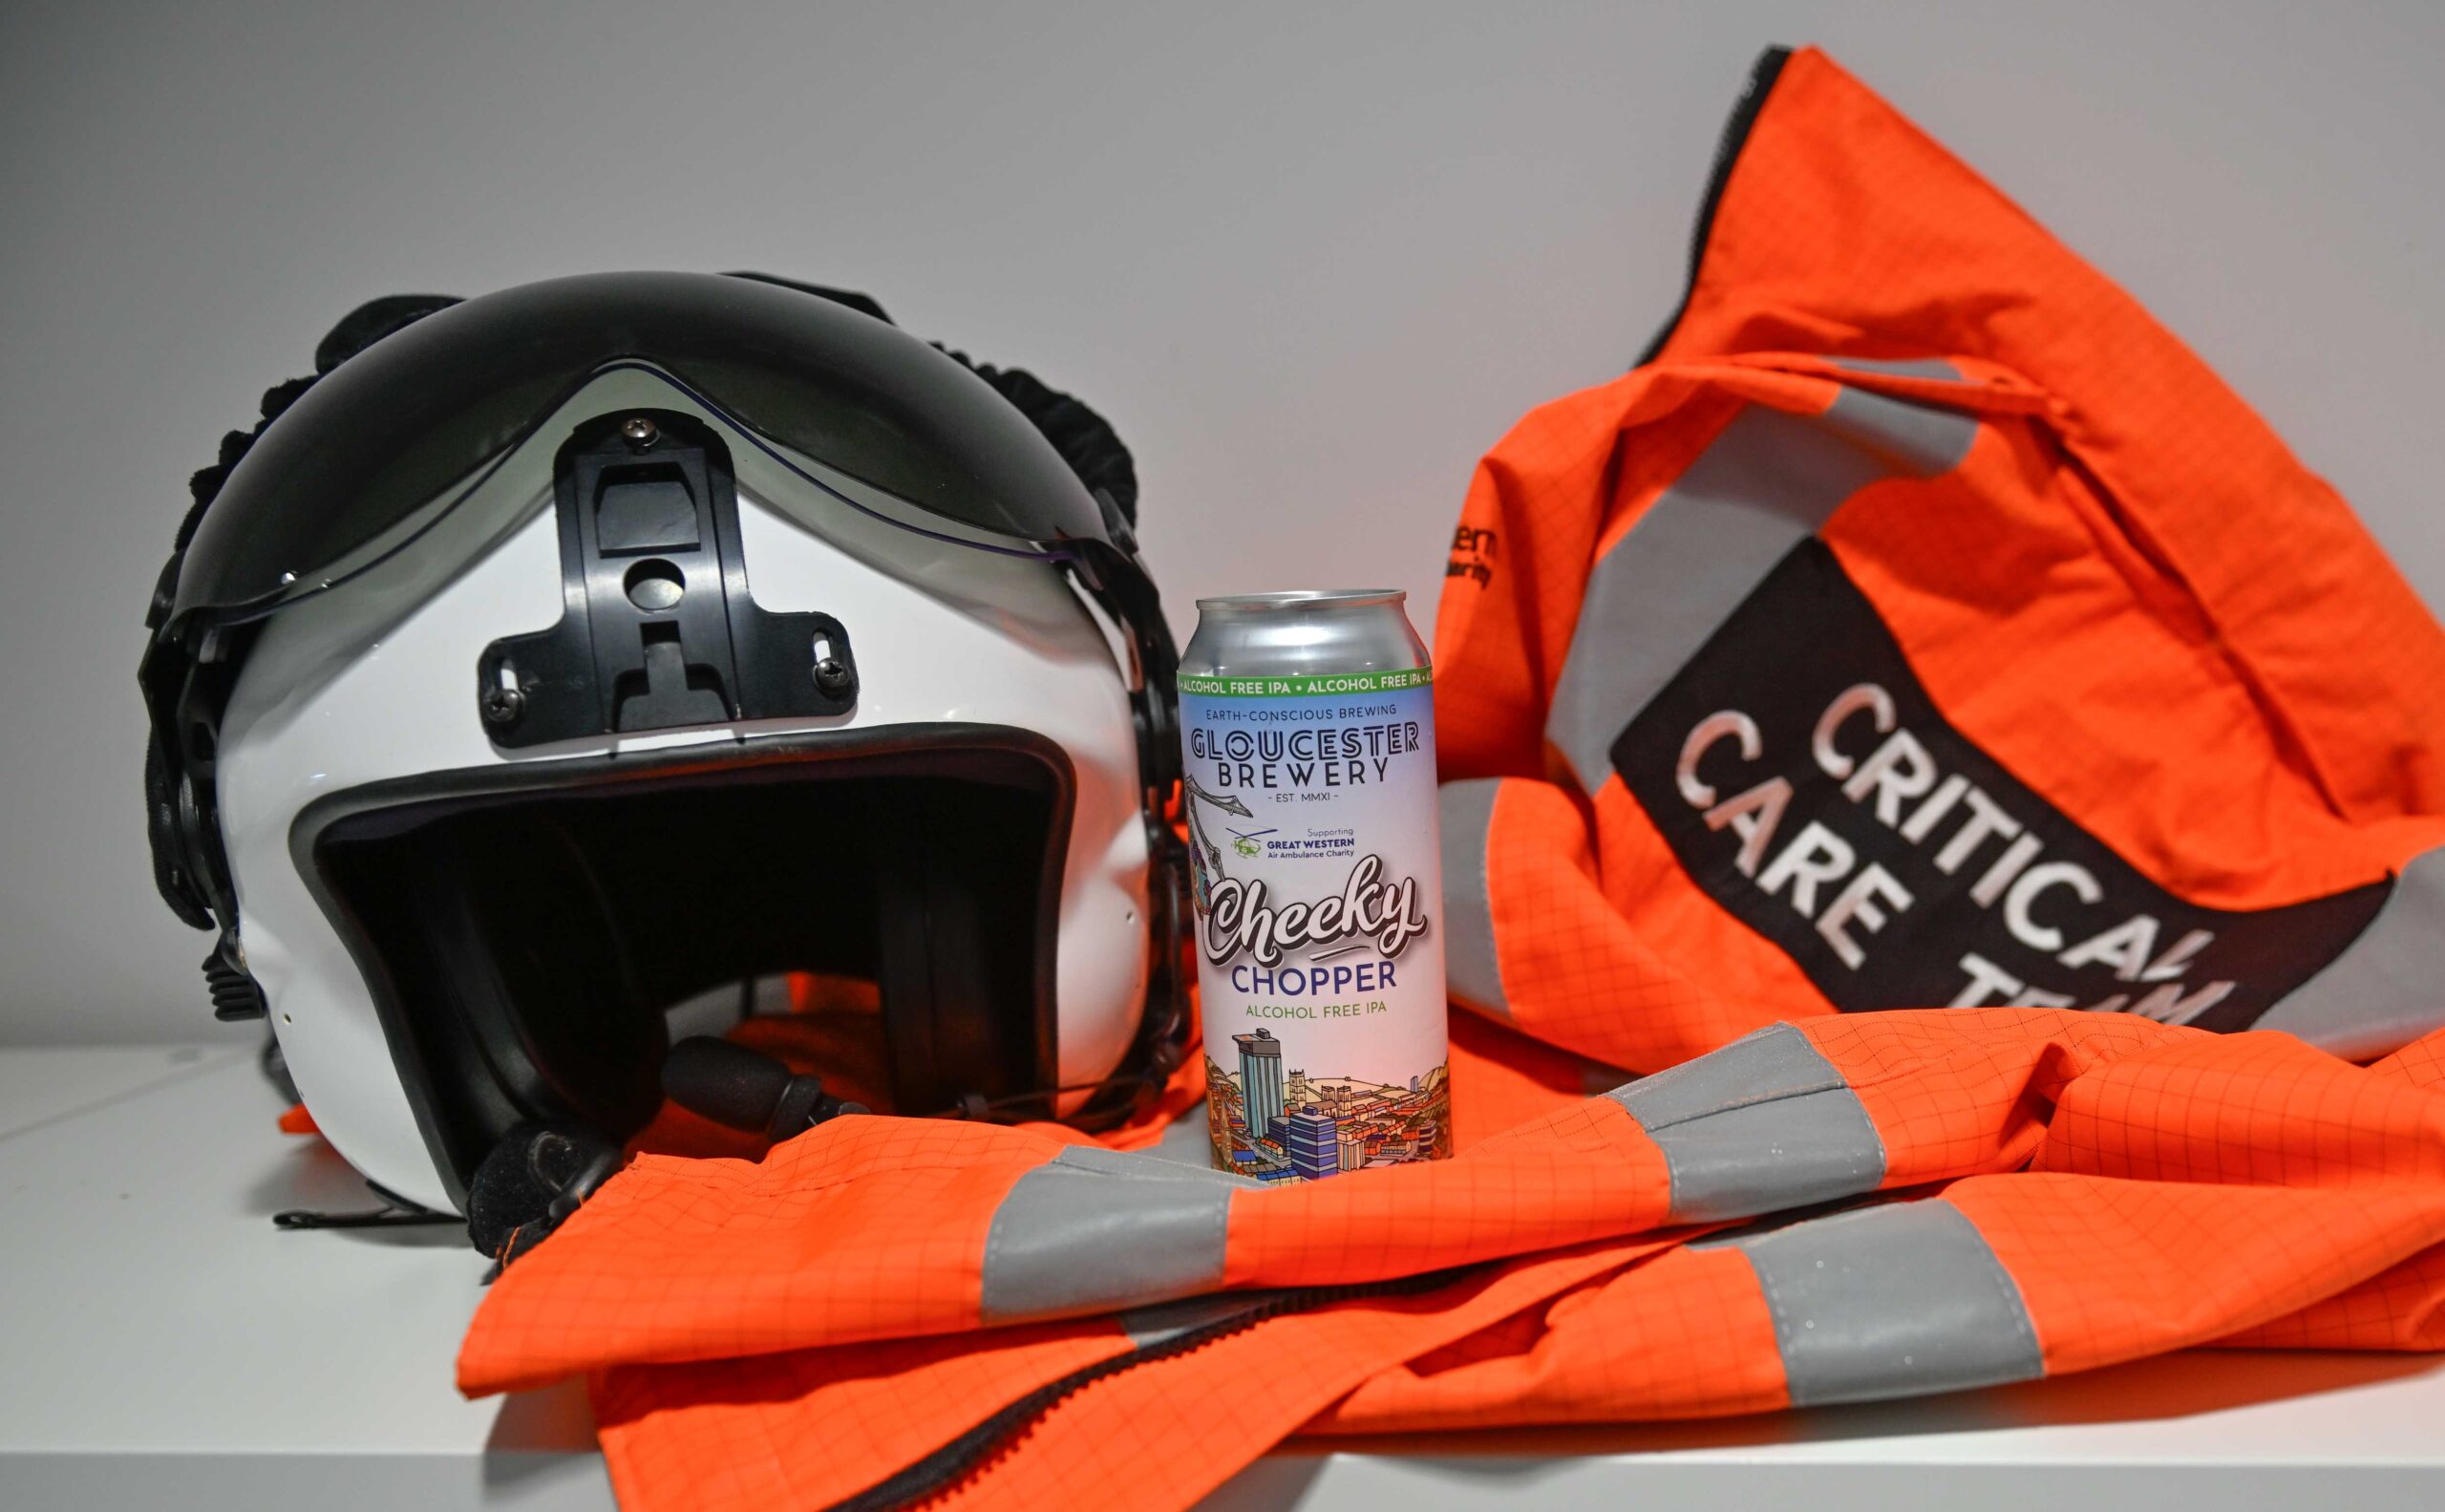 A can of Cheeky Chopper in between a GWAAC flight helmet and jacket